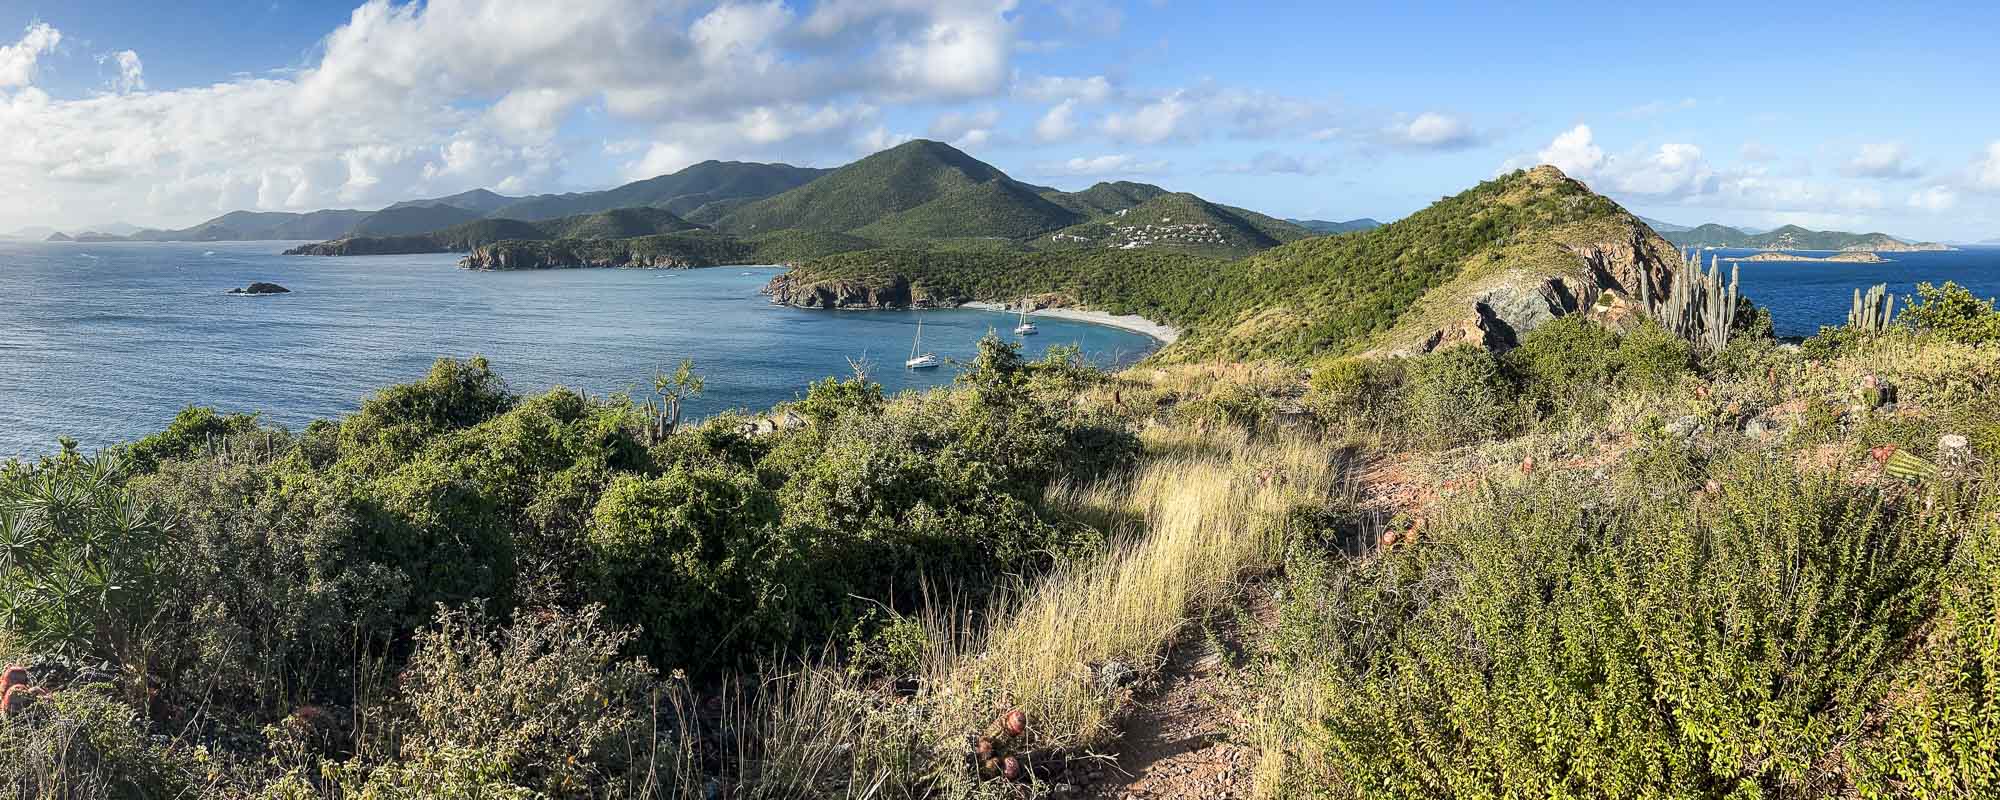 St. John panorama on Ram Head in Virgin Islands National Park